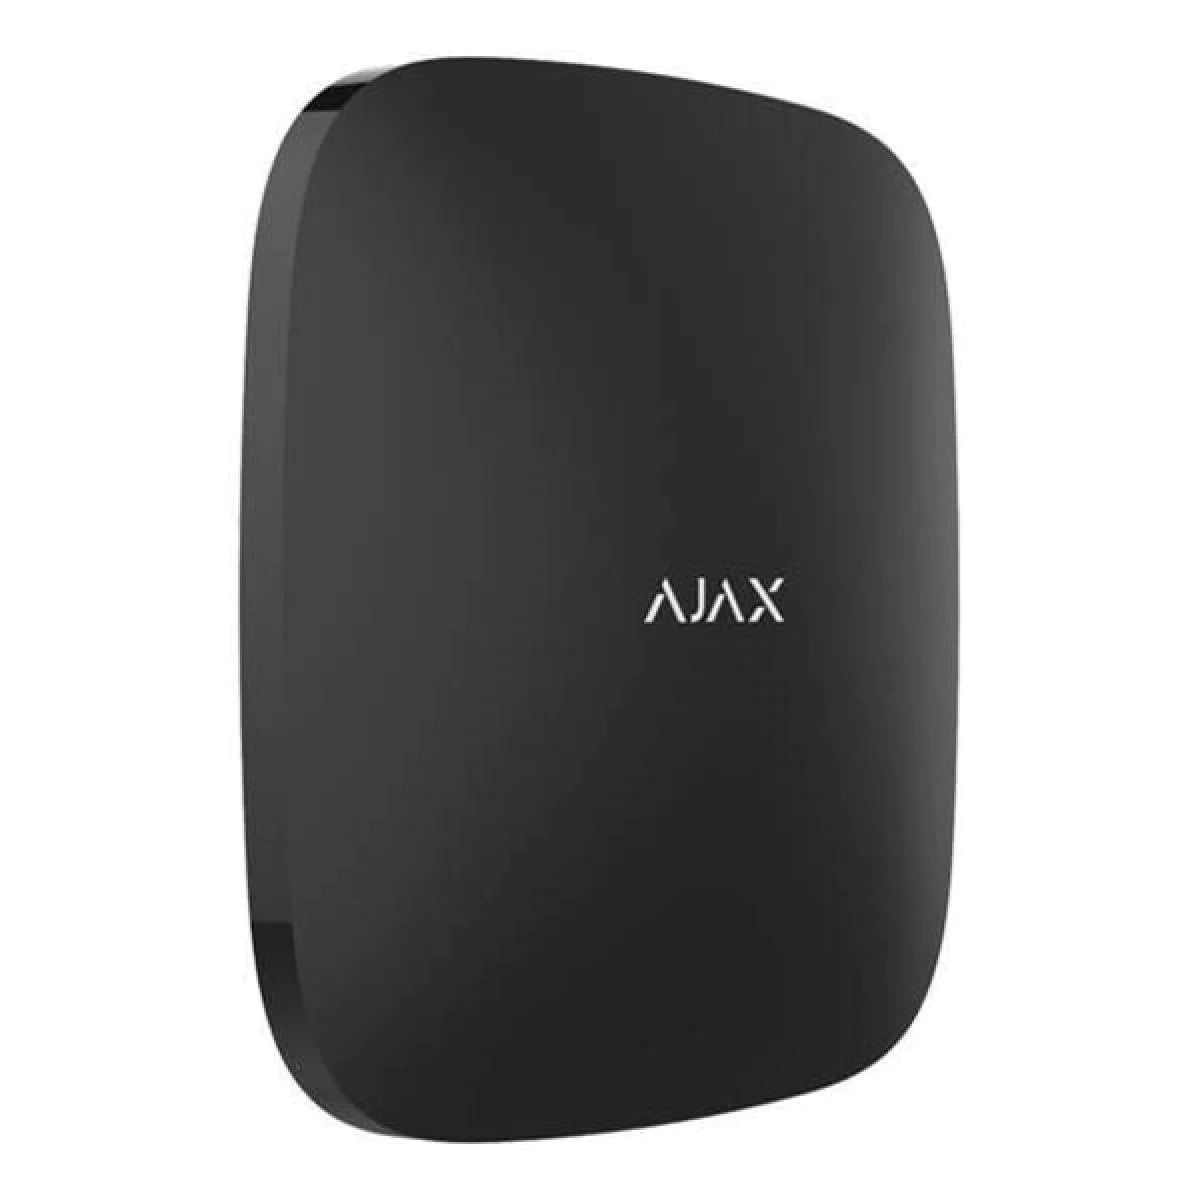 Ajax ReX 2 Radio signal range extender